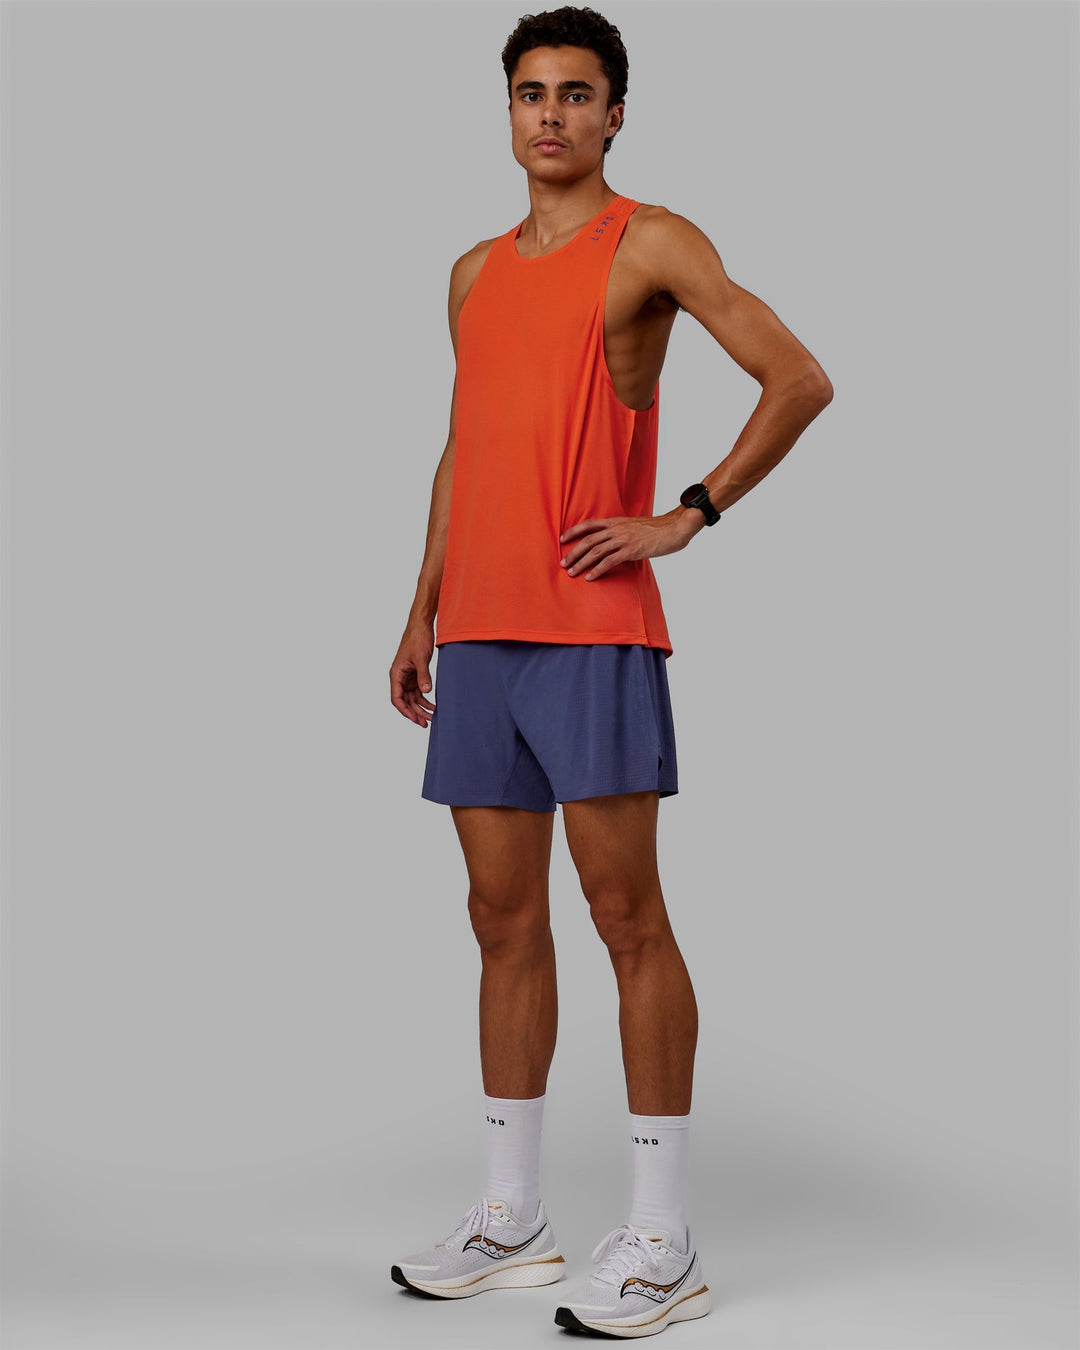 Man wearing UltraAir 5" Lined Performance Shorts - Future Dusk-Reflective